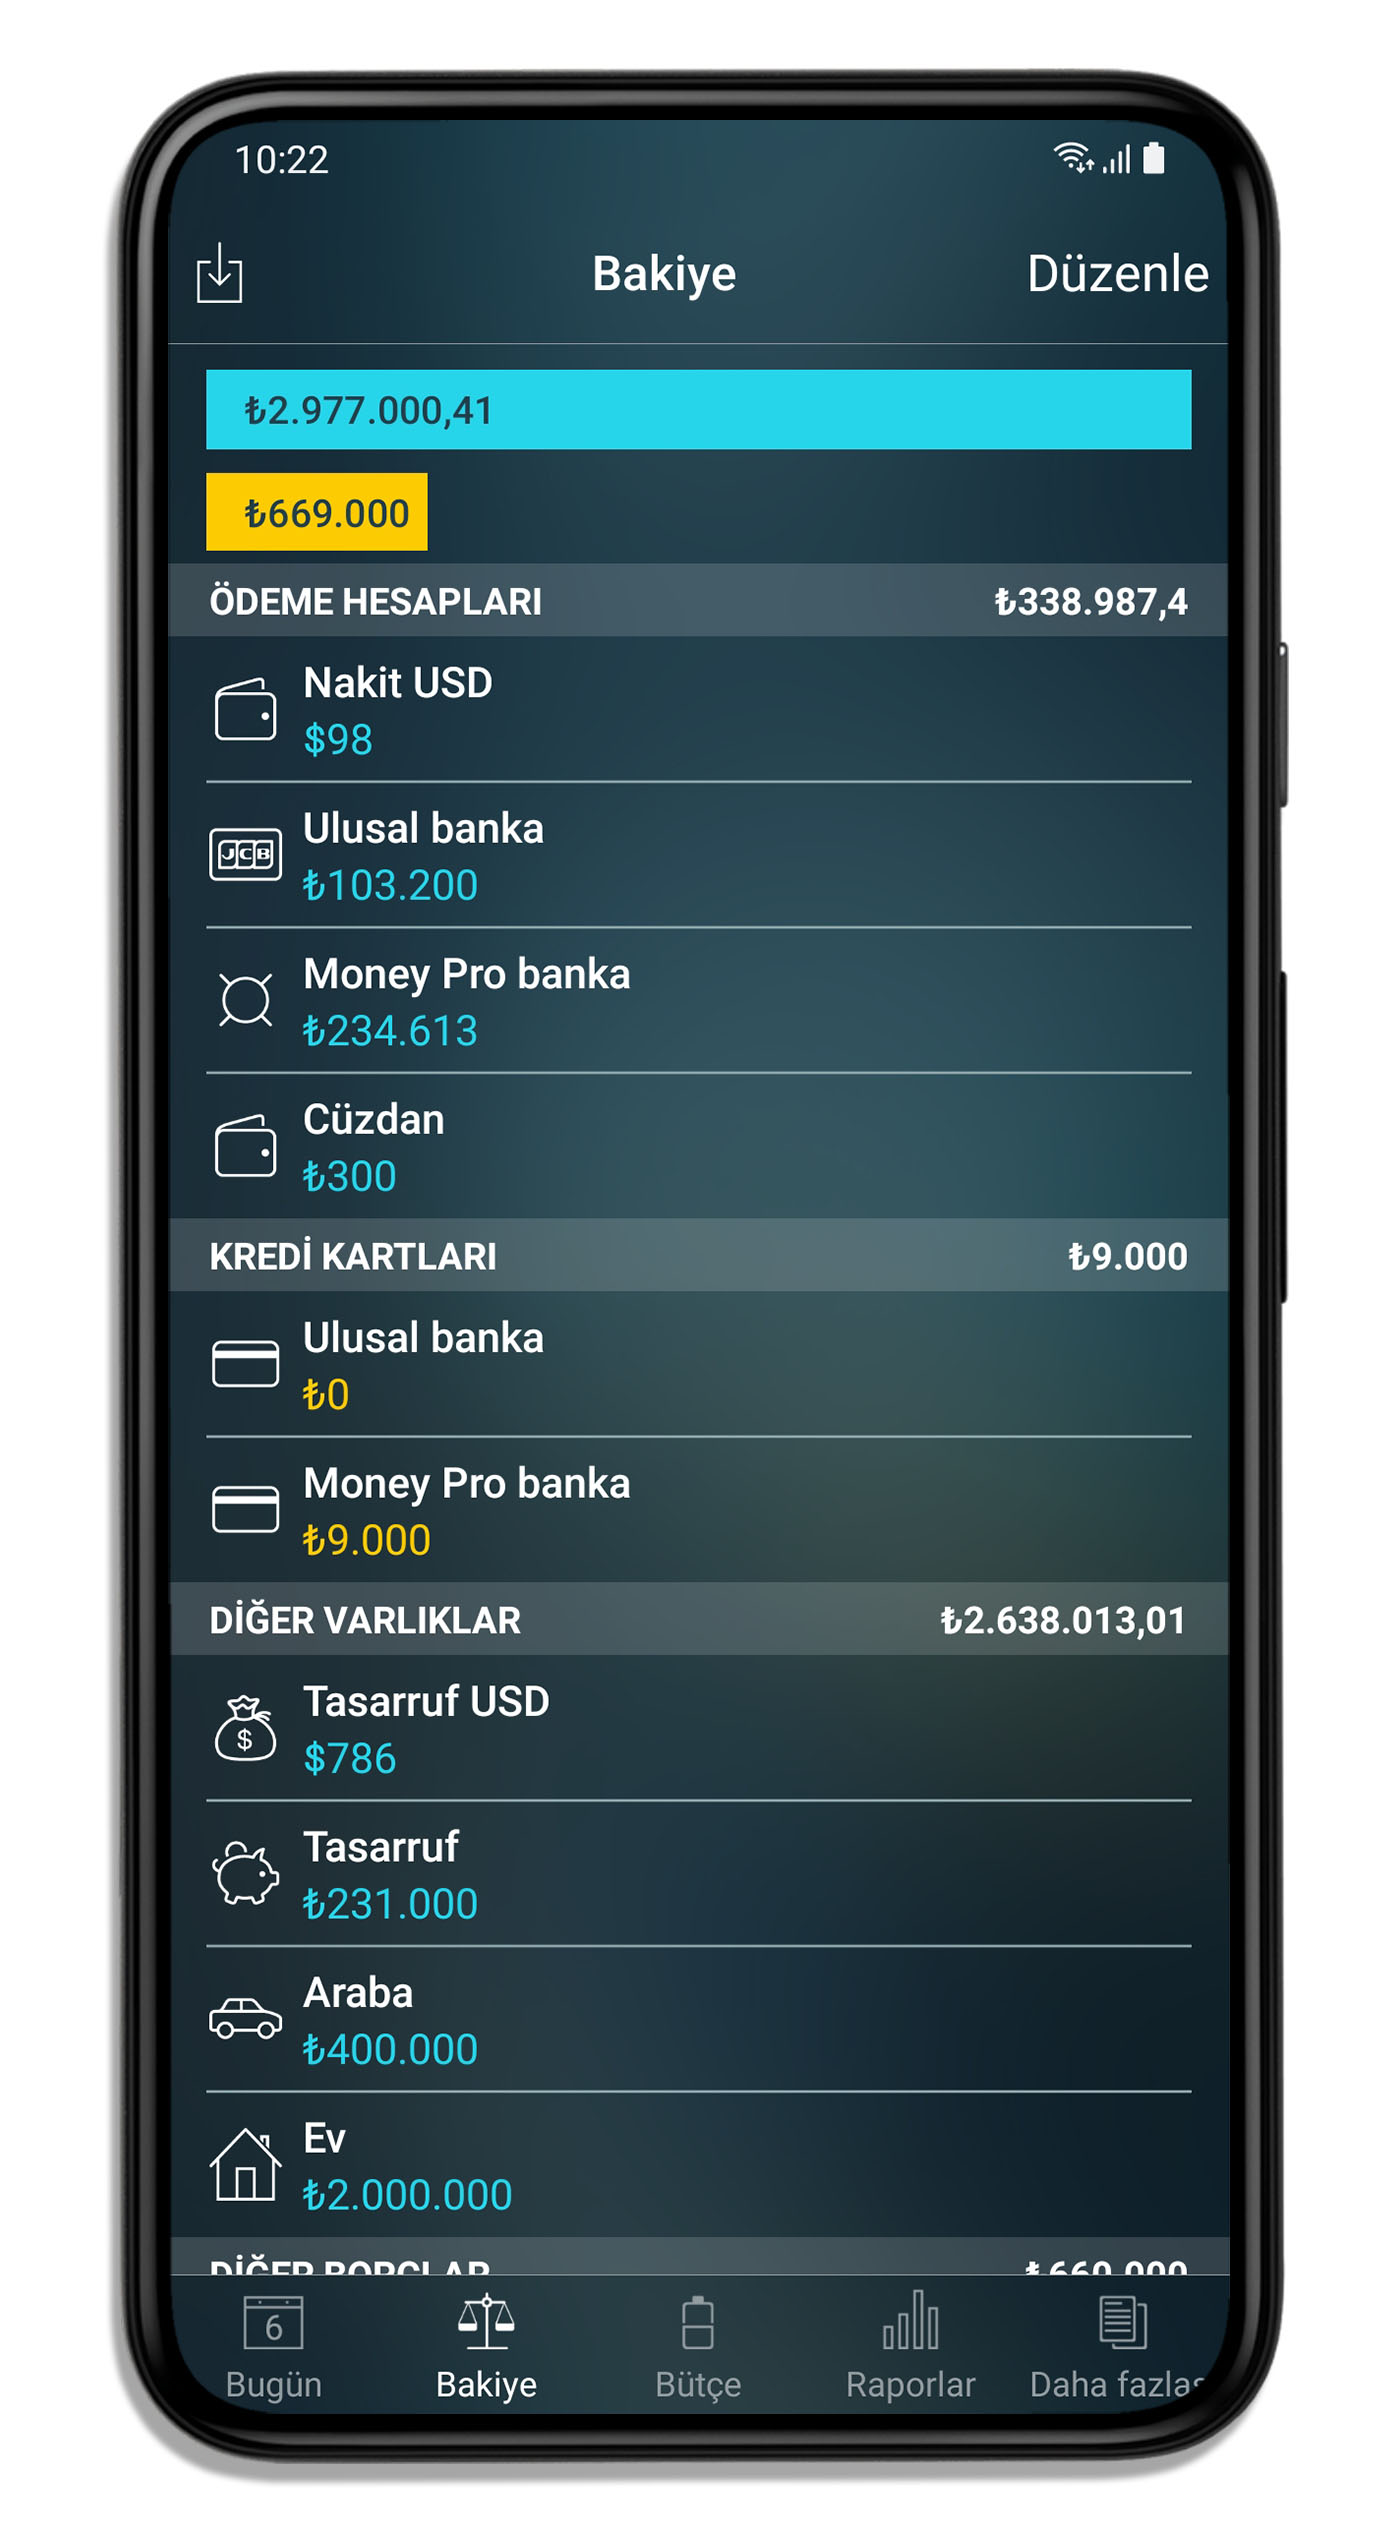 Money Pro for iPhone and iPad - Hesaplar